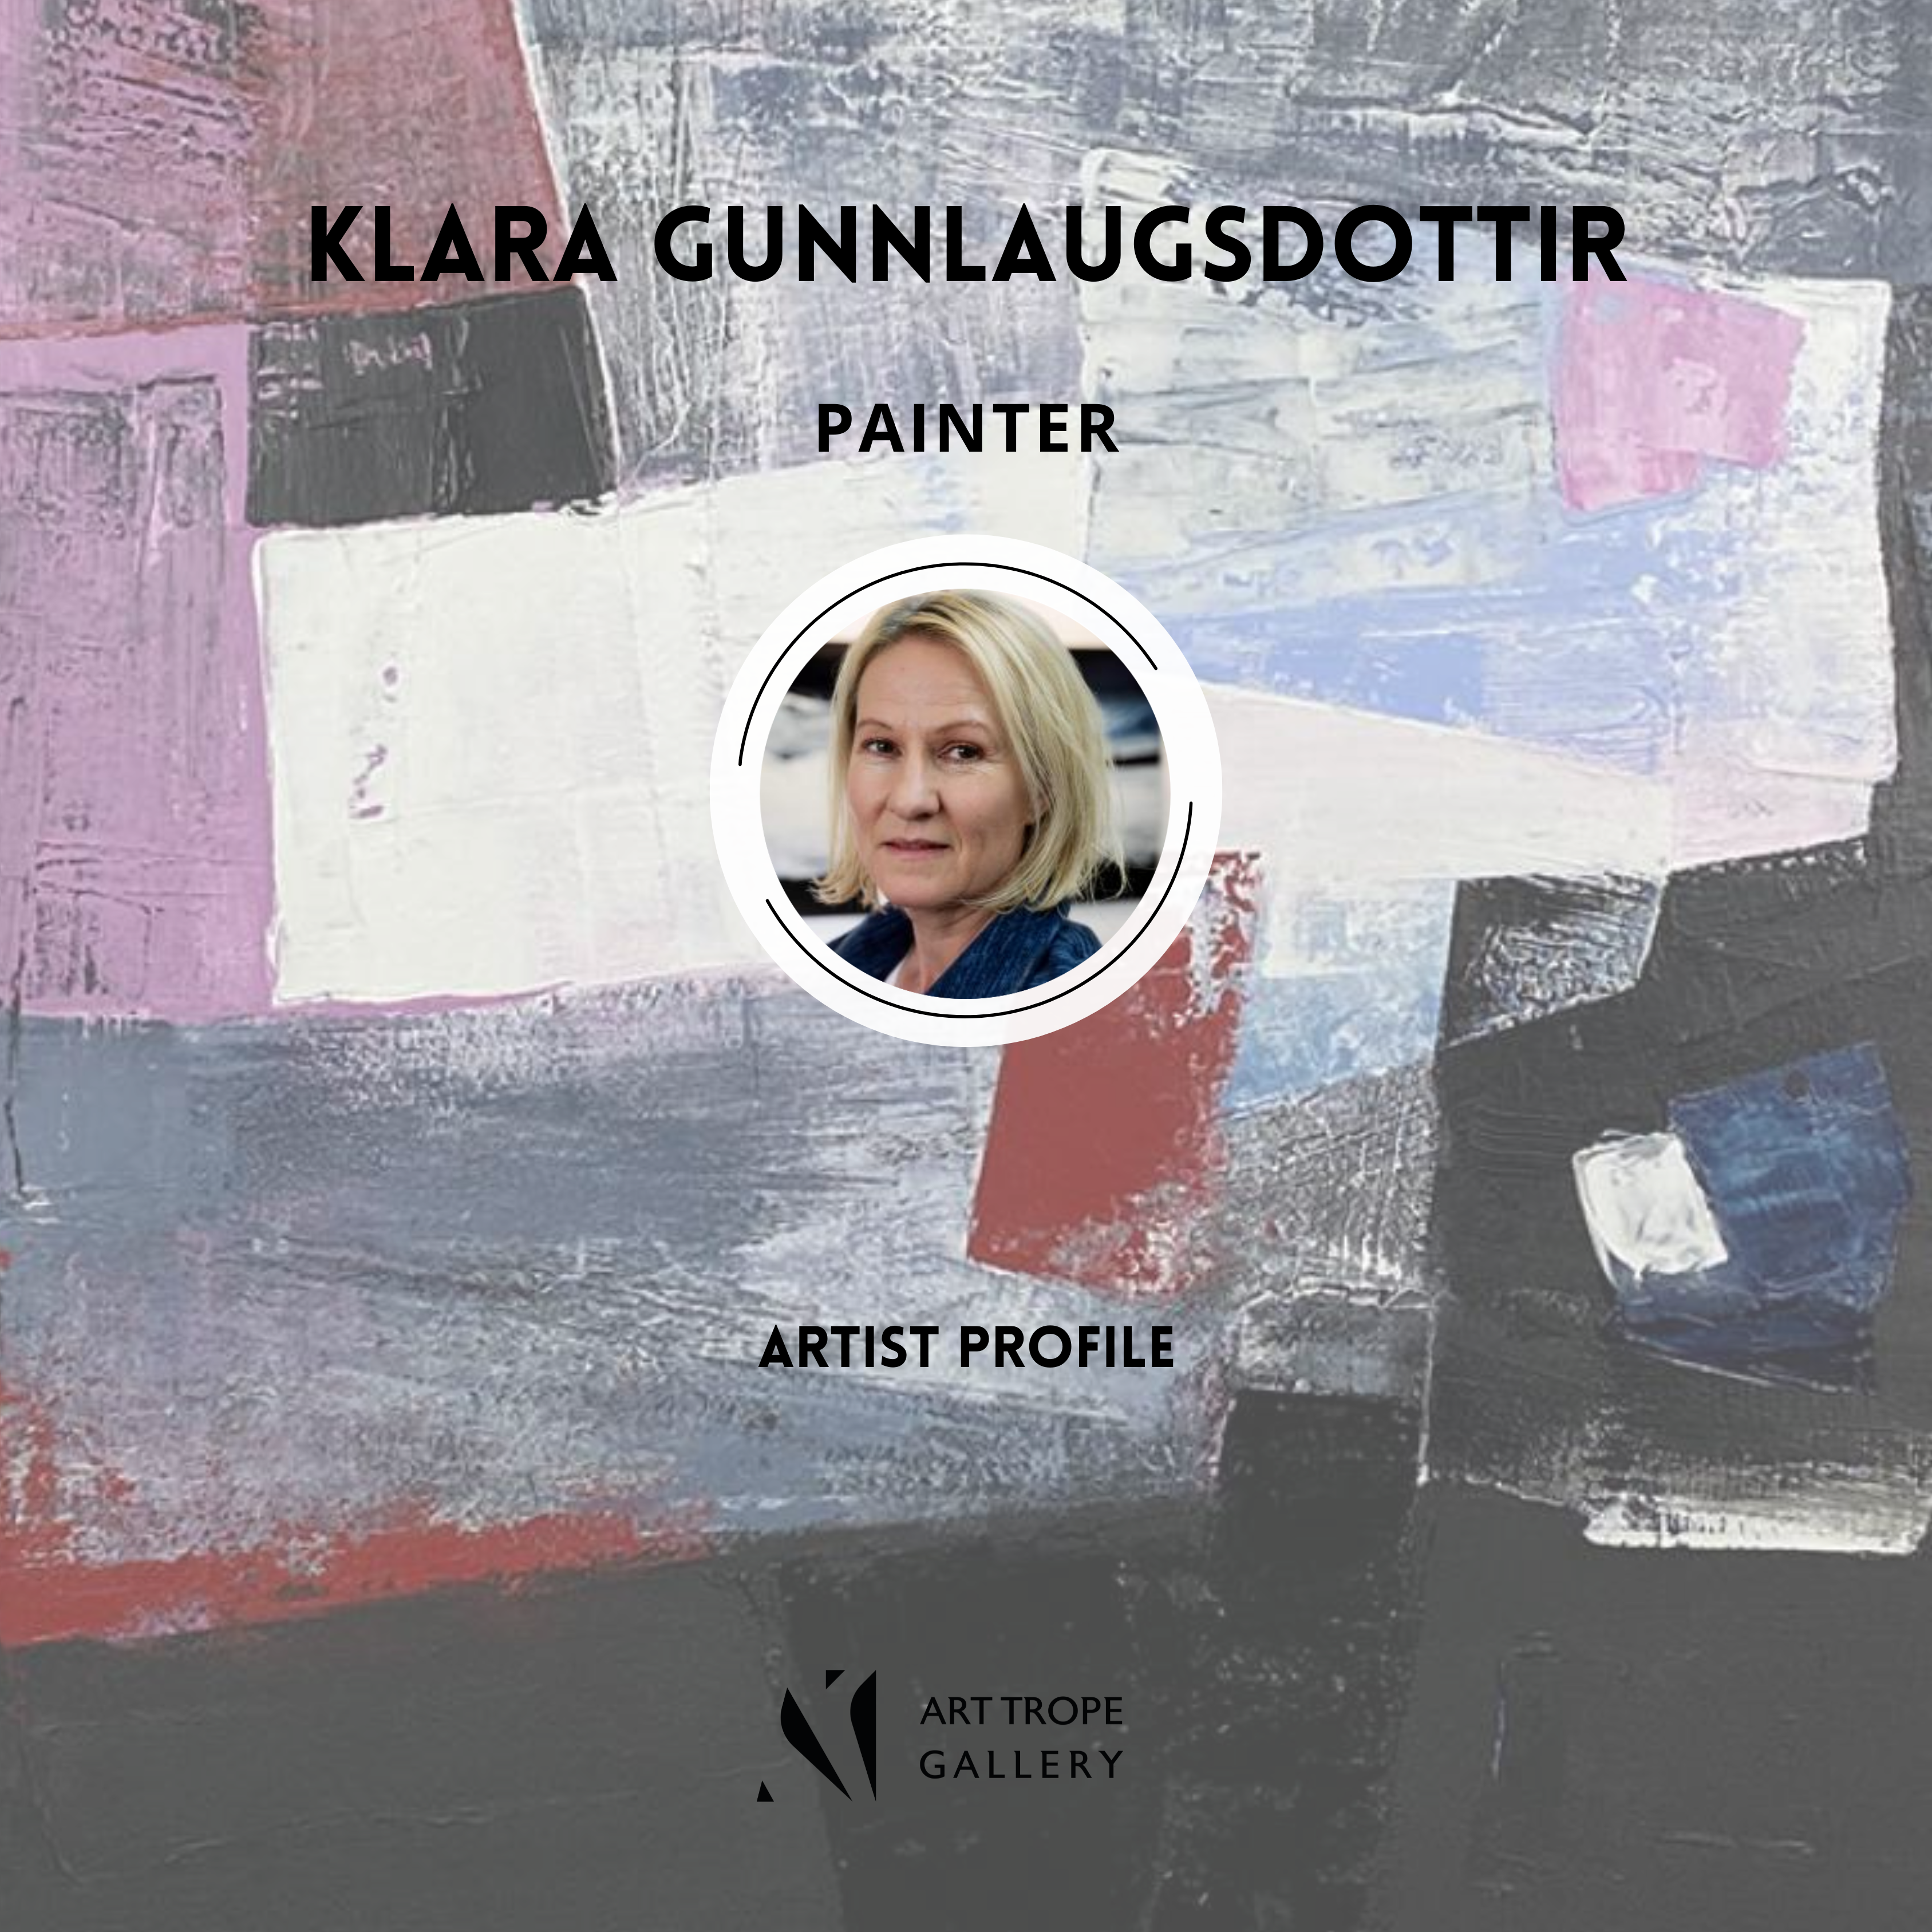 Art Trope Gallery features Painter Klara Gunnlaugsdottir in a dedicated article!